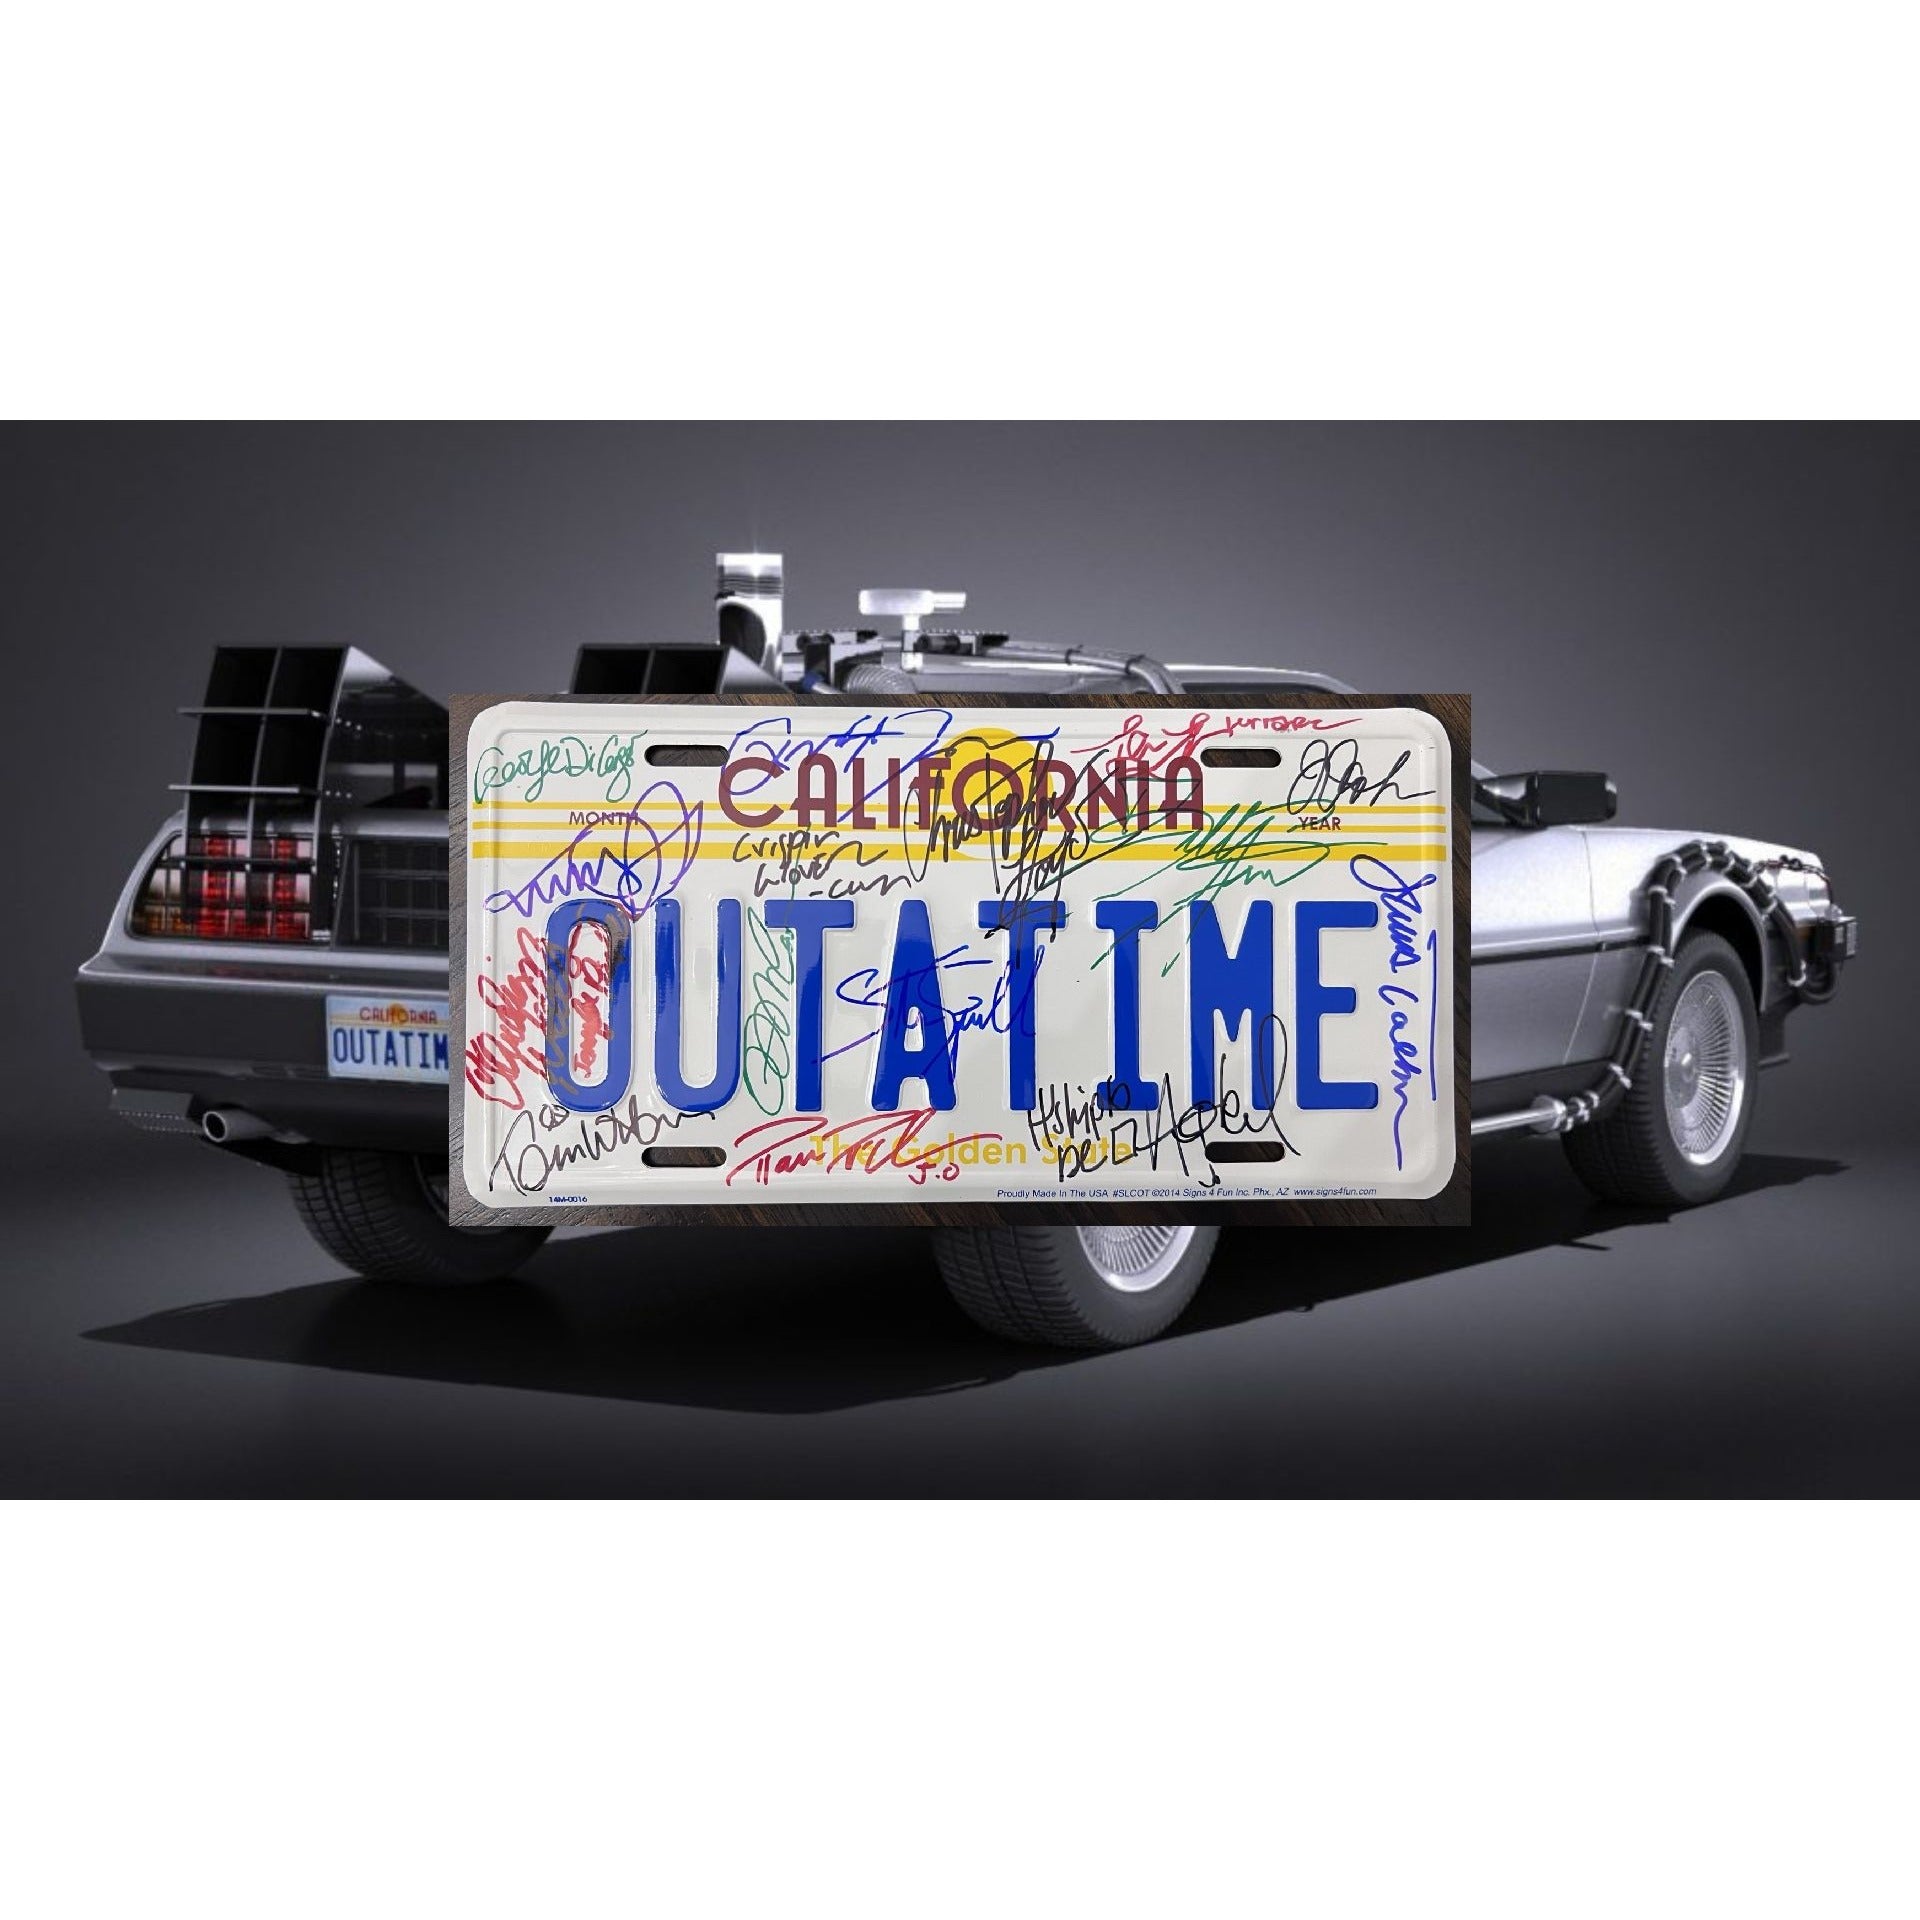 Back To The Future original license plate cast signed :Michael J Fox, Christopher Lloyd, Lea Thompson, Crispin Glover, Thomas F Wilson, Bil